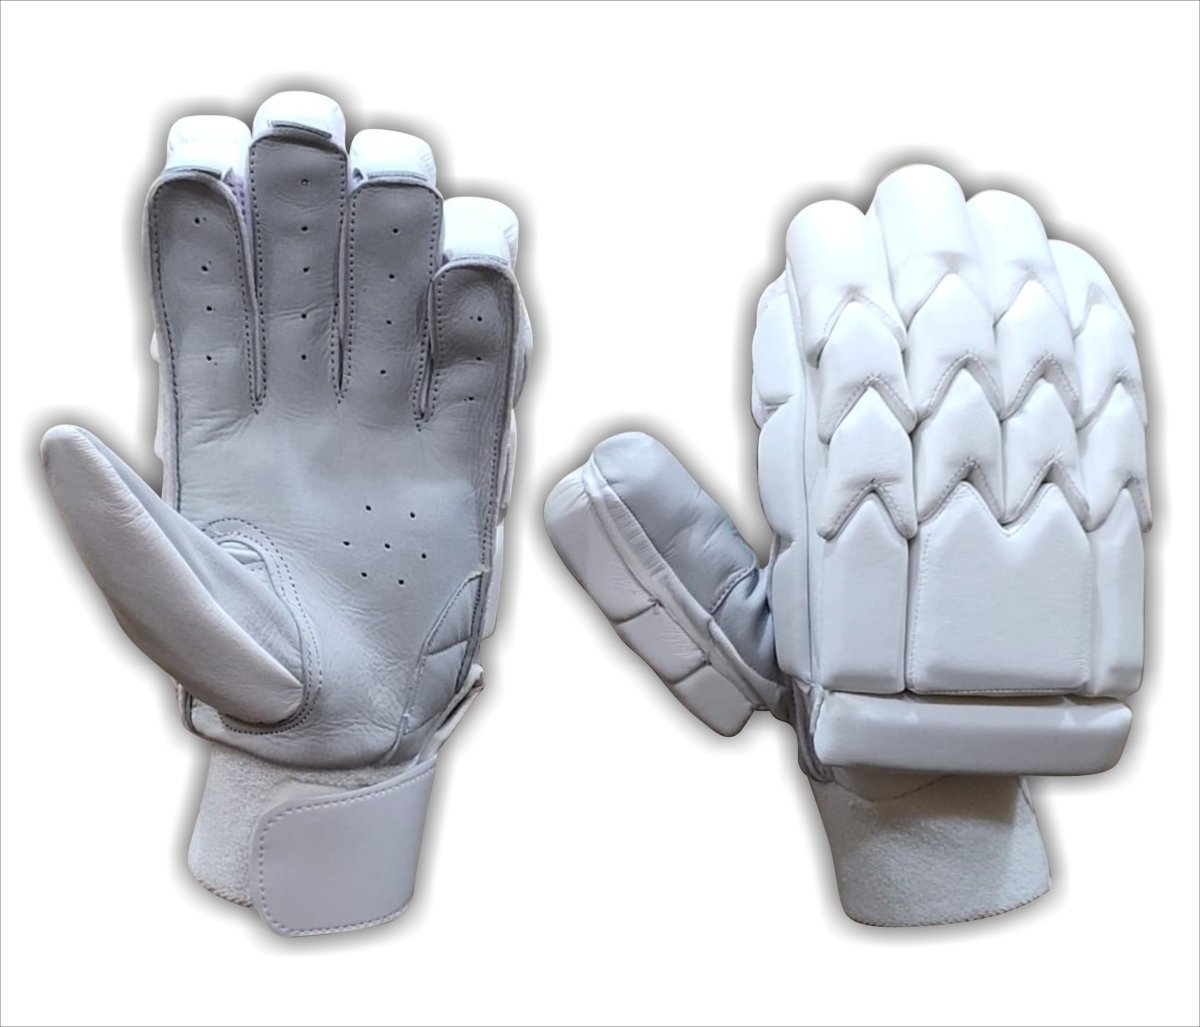 SW-05 Cricket Batting Gloves Calf Palm.